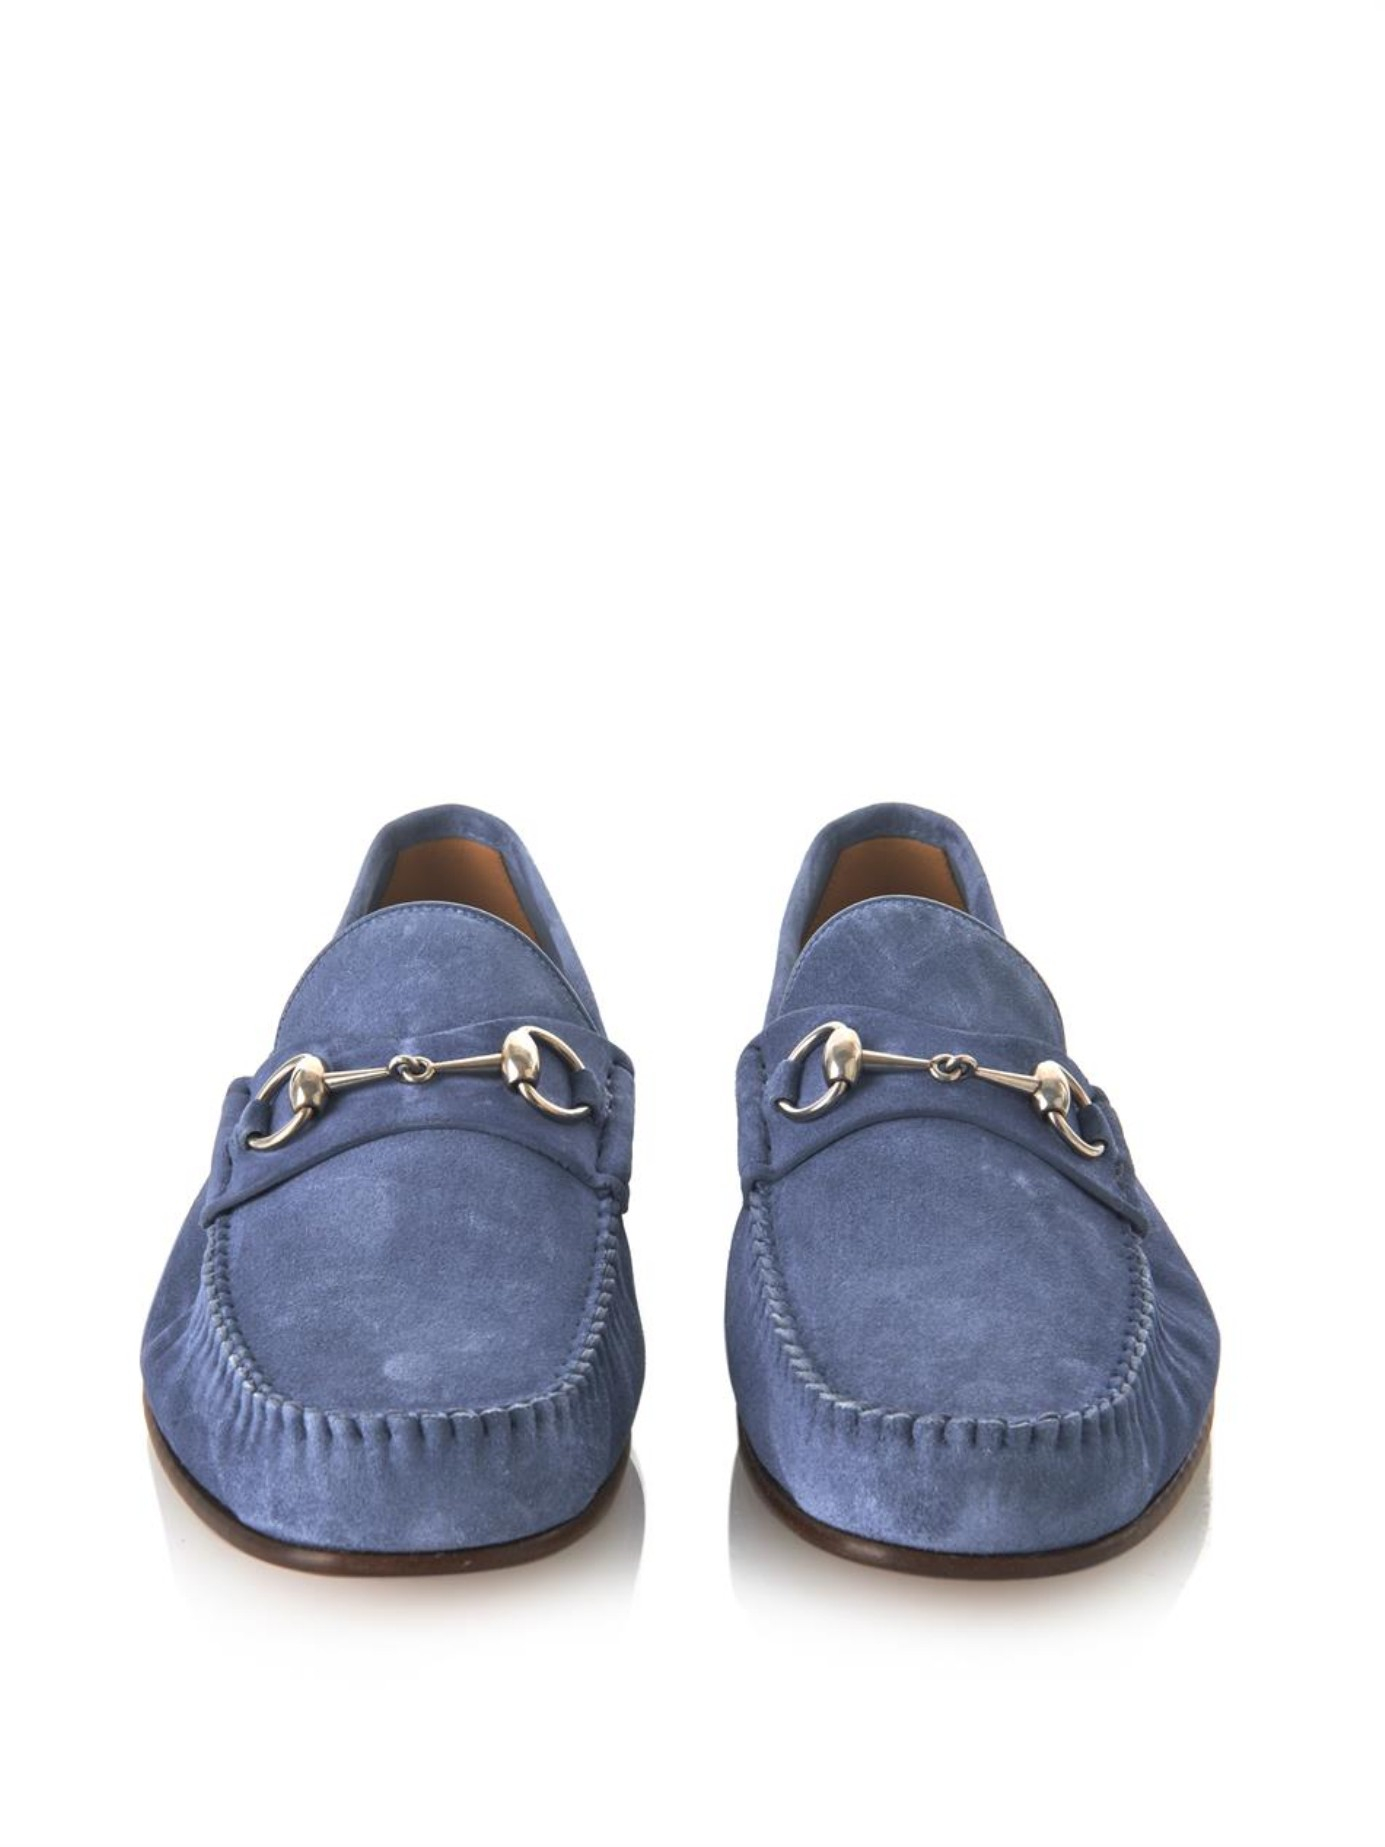 Men's Gucci Jordaan loafer in blue suede